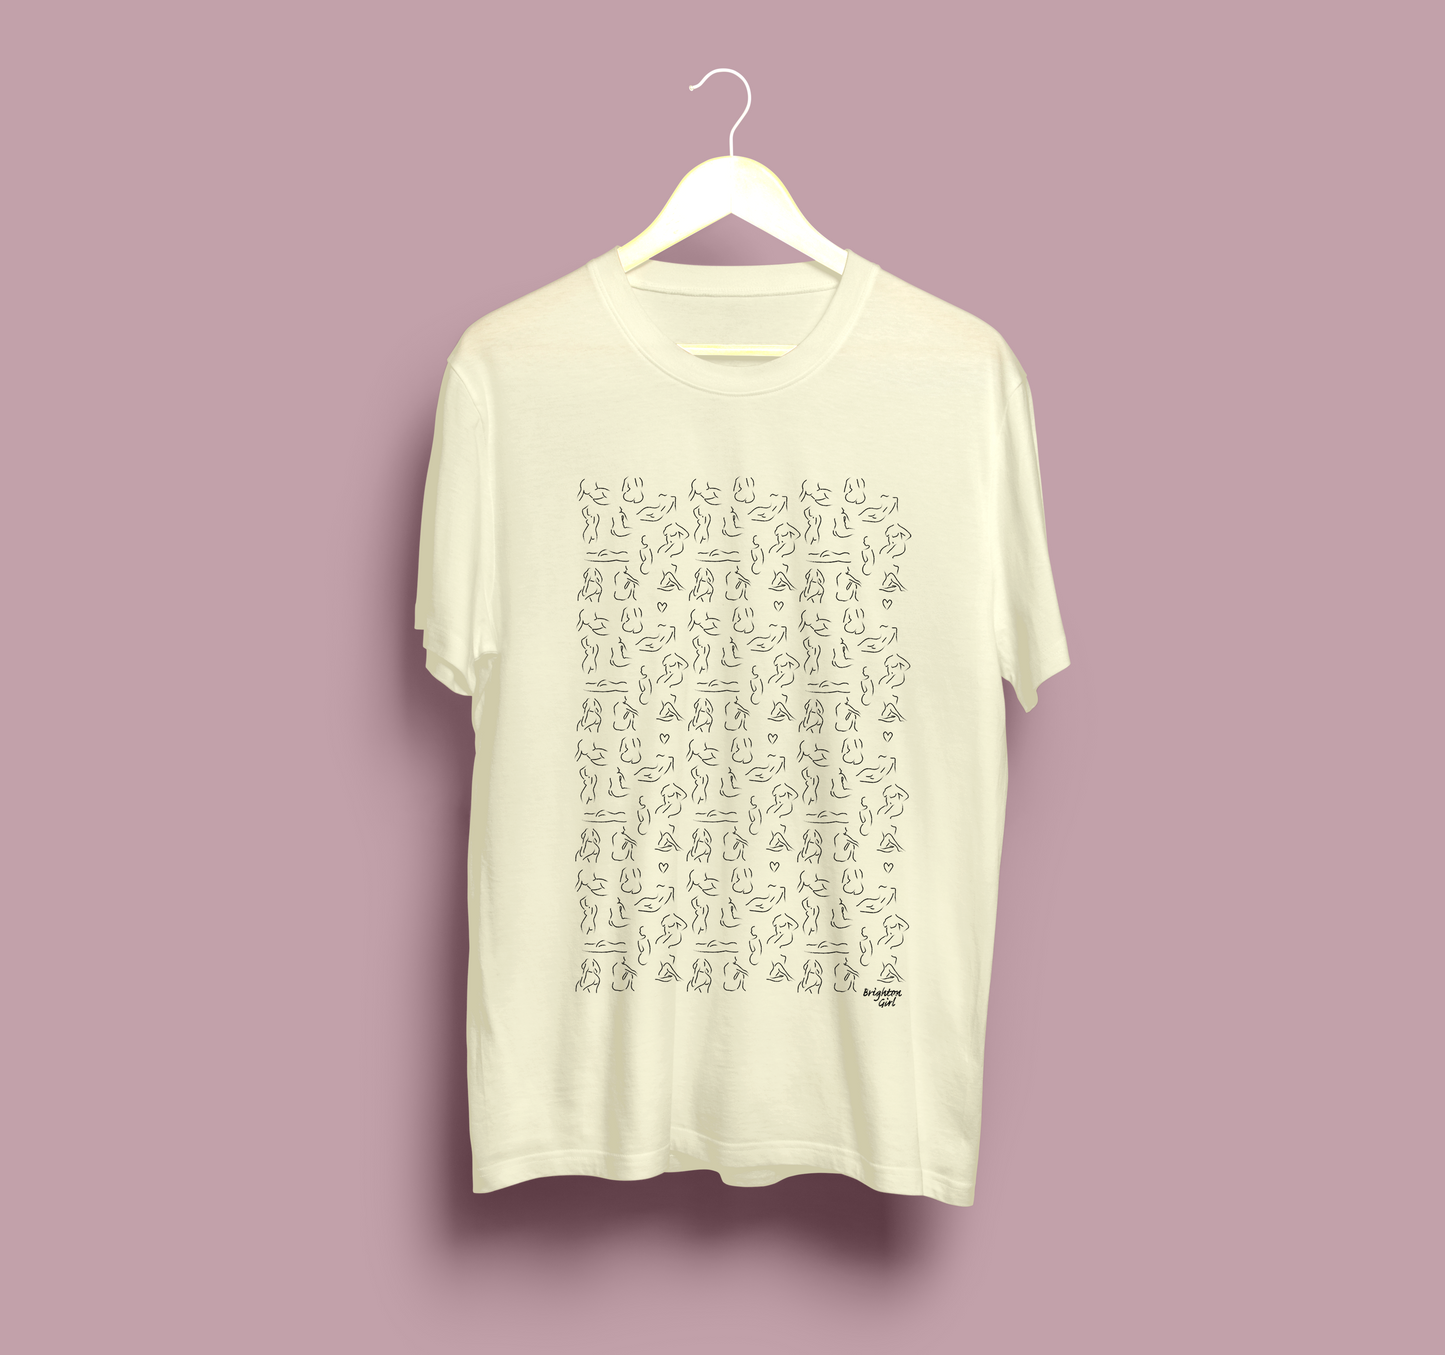 Brighton Girl Teeshirt - Ella Hunter design (Adult Size)